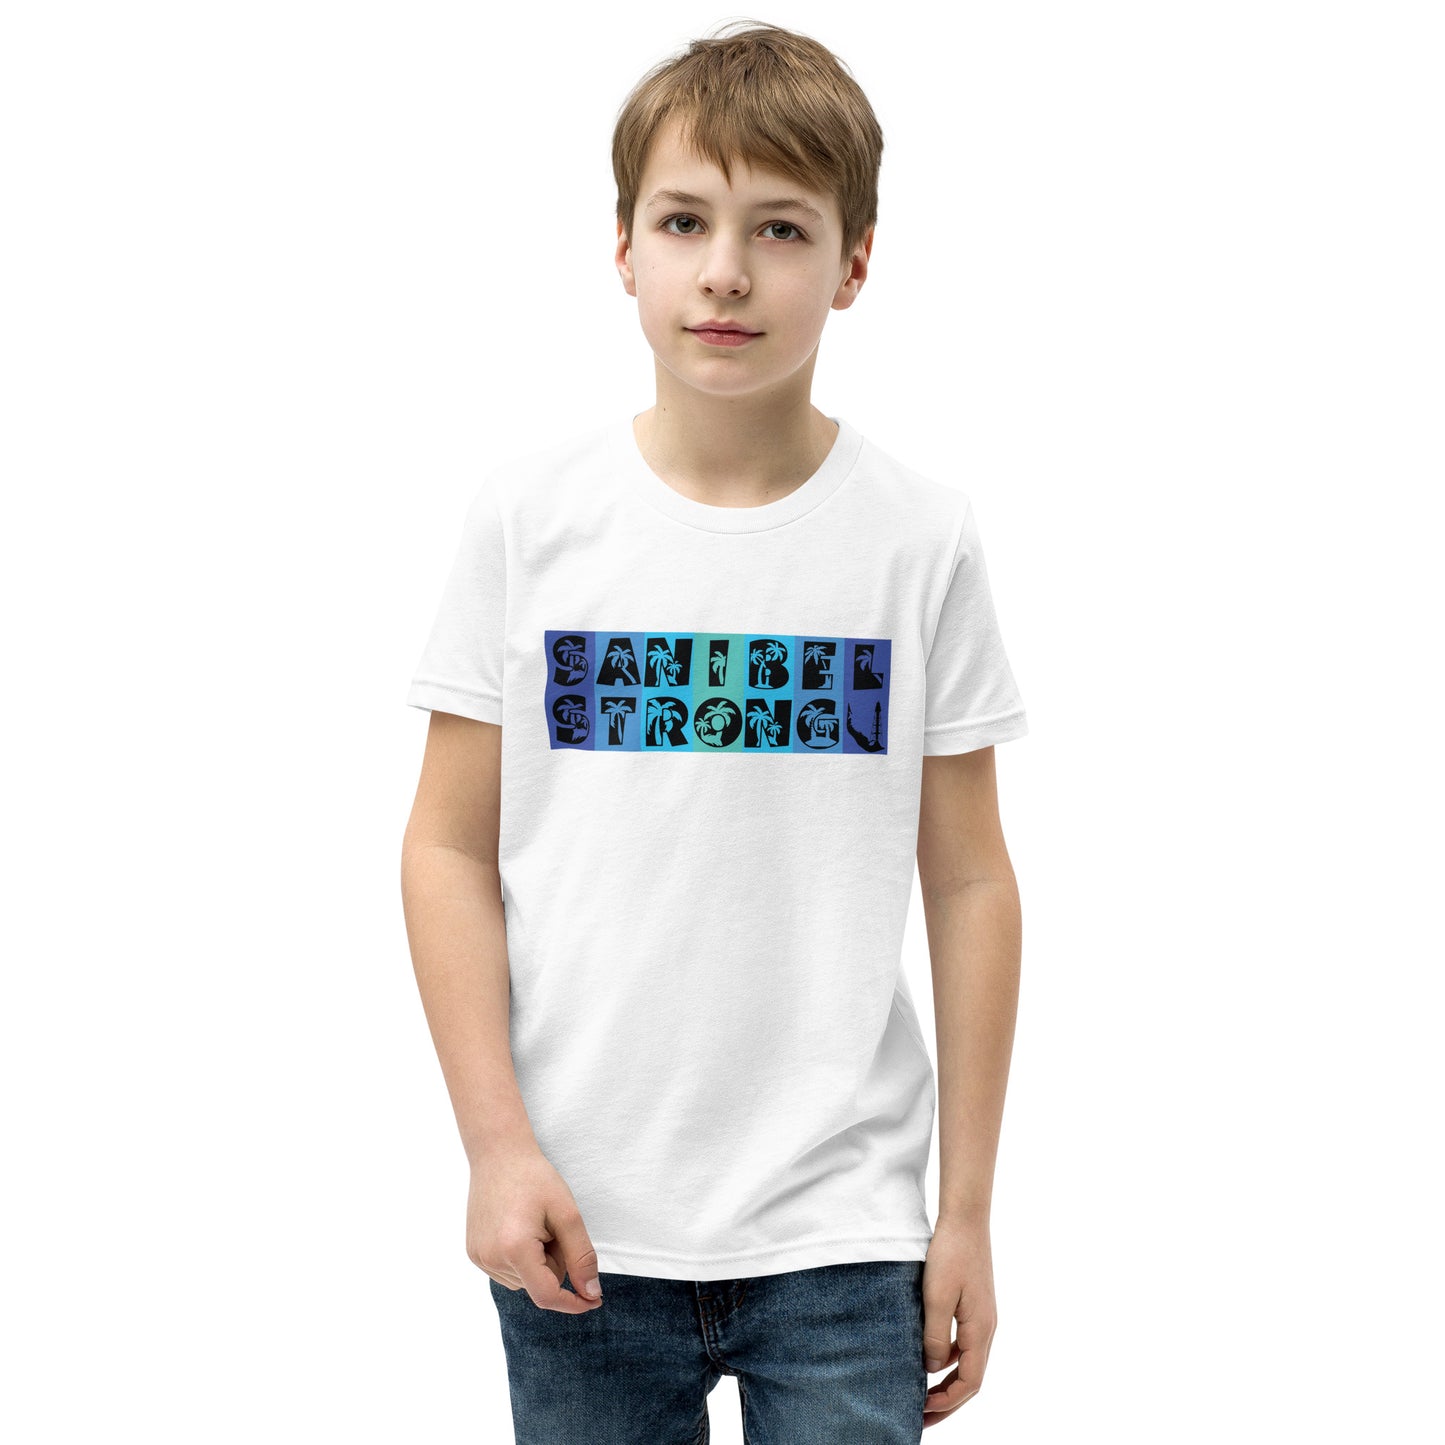 Sanibel Strong Youth Shirt - Blue Design